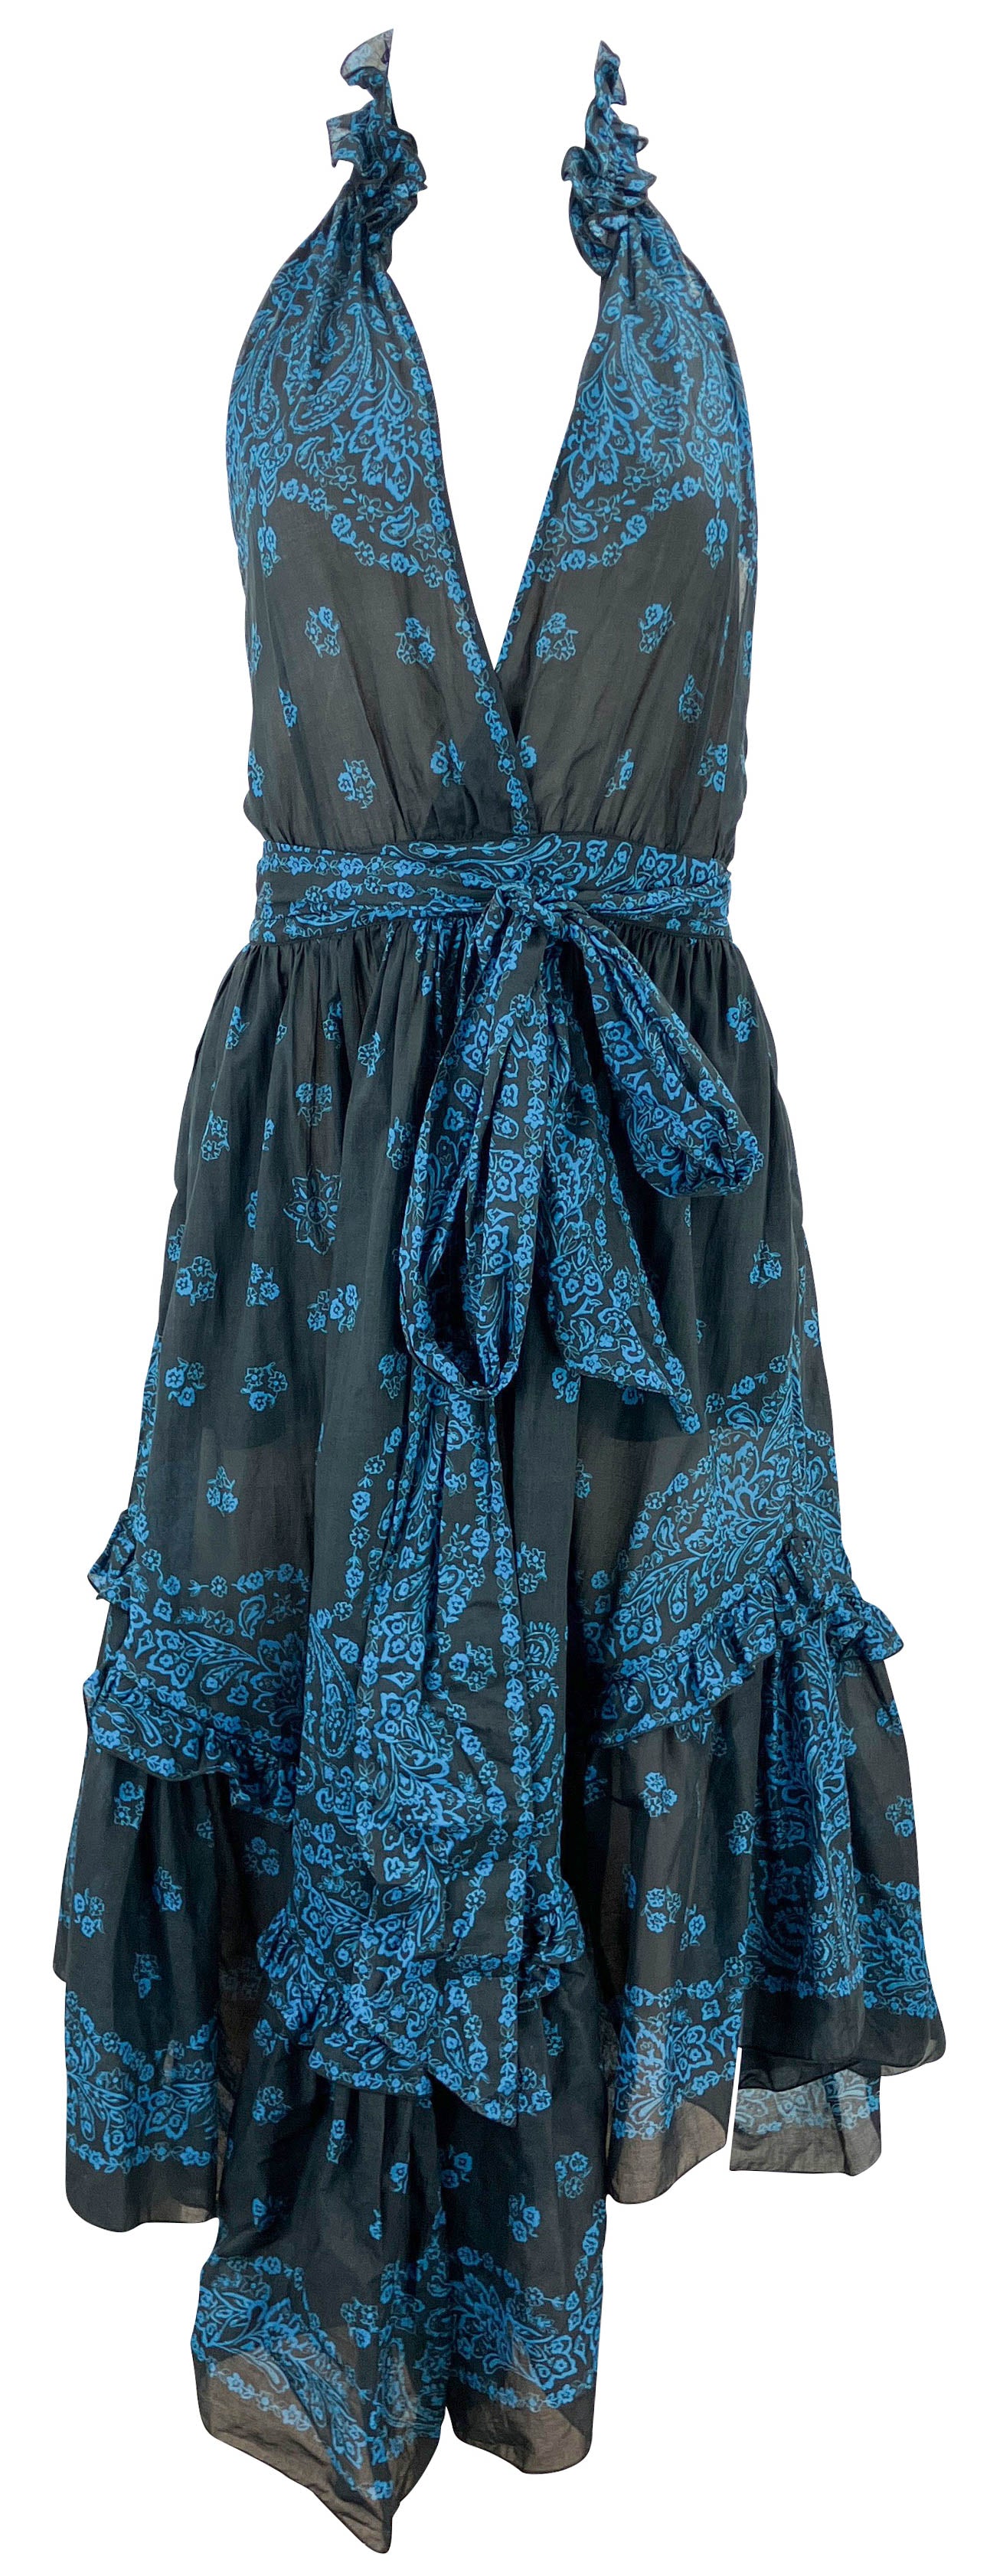 Alexandre Vauthier Blue Bandana Long Dress in Capri Blue - Discounts on Alexandre Vauthier at UAL